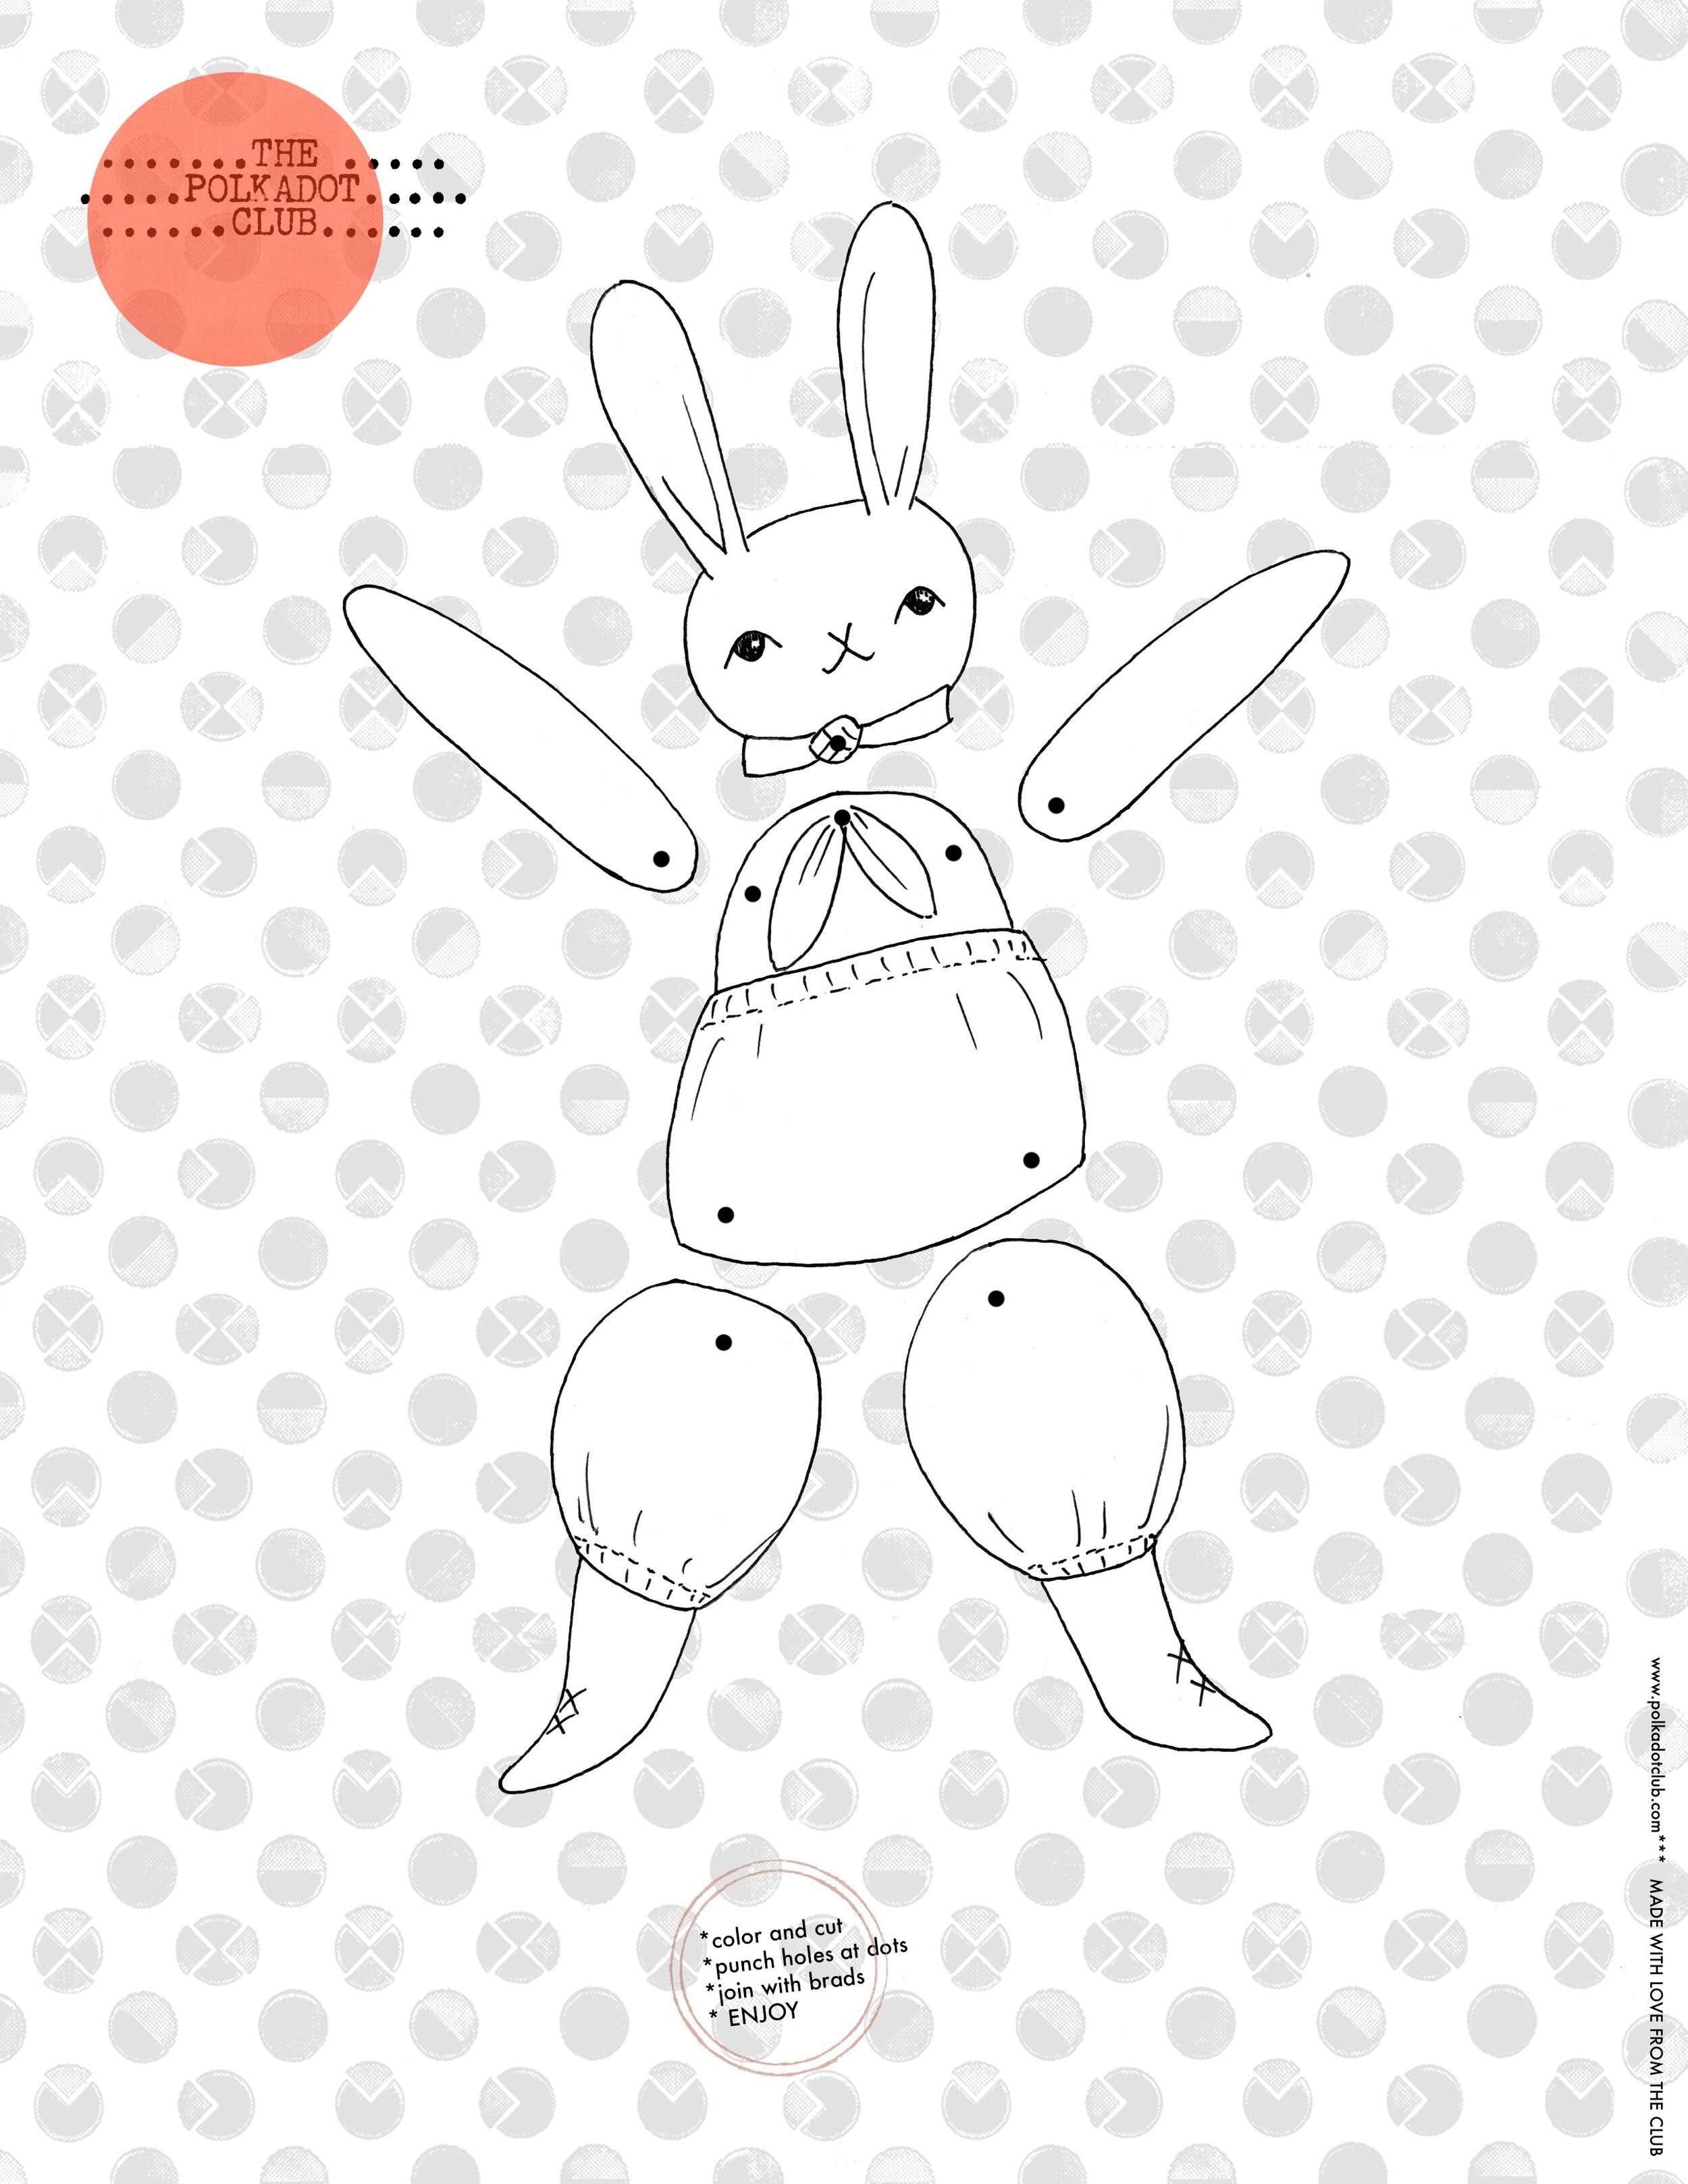 PDC_forMP_rabbit4.jpg